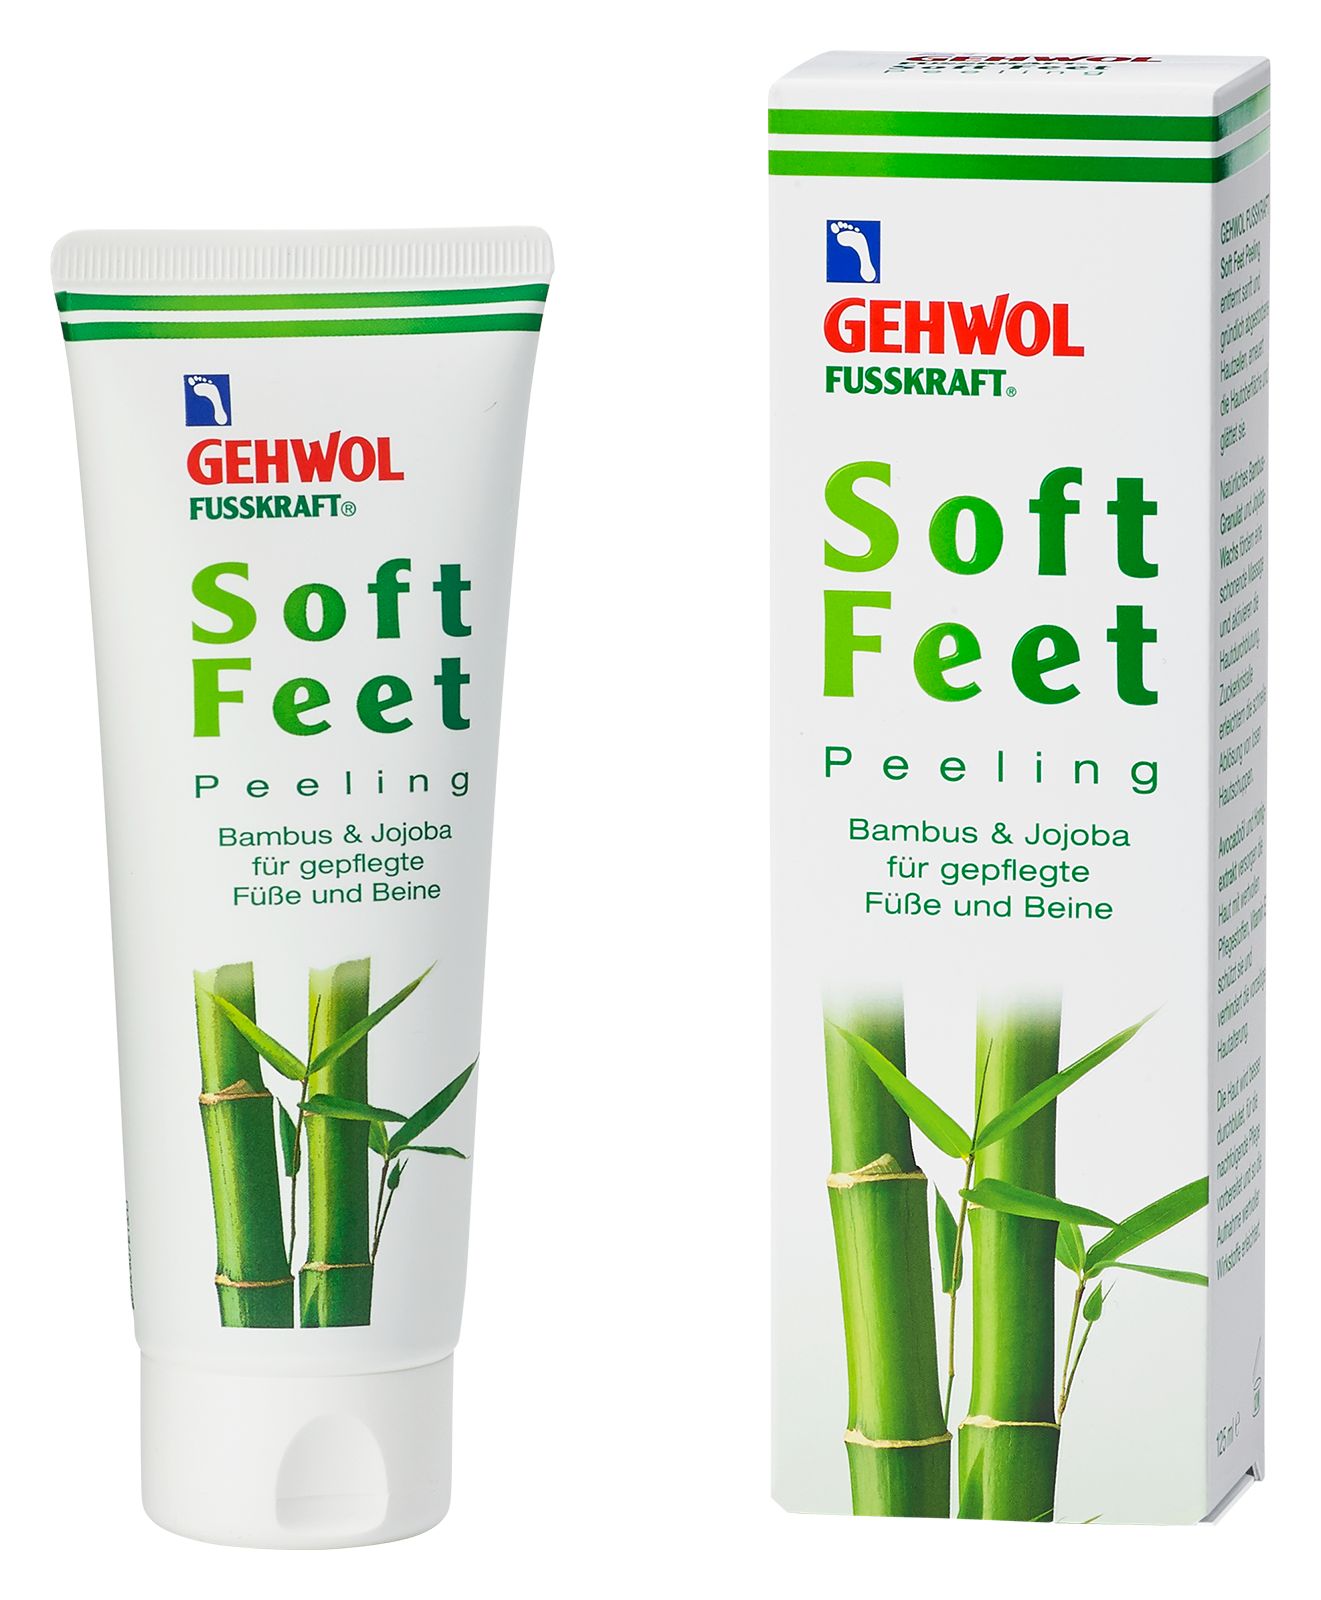 Gehwol Fusskraft Soft Feet Peeling, 125 ml